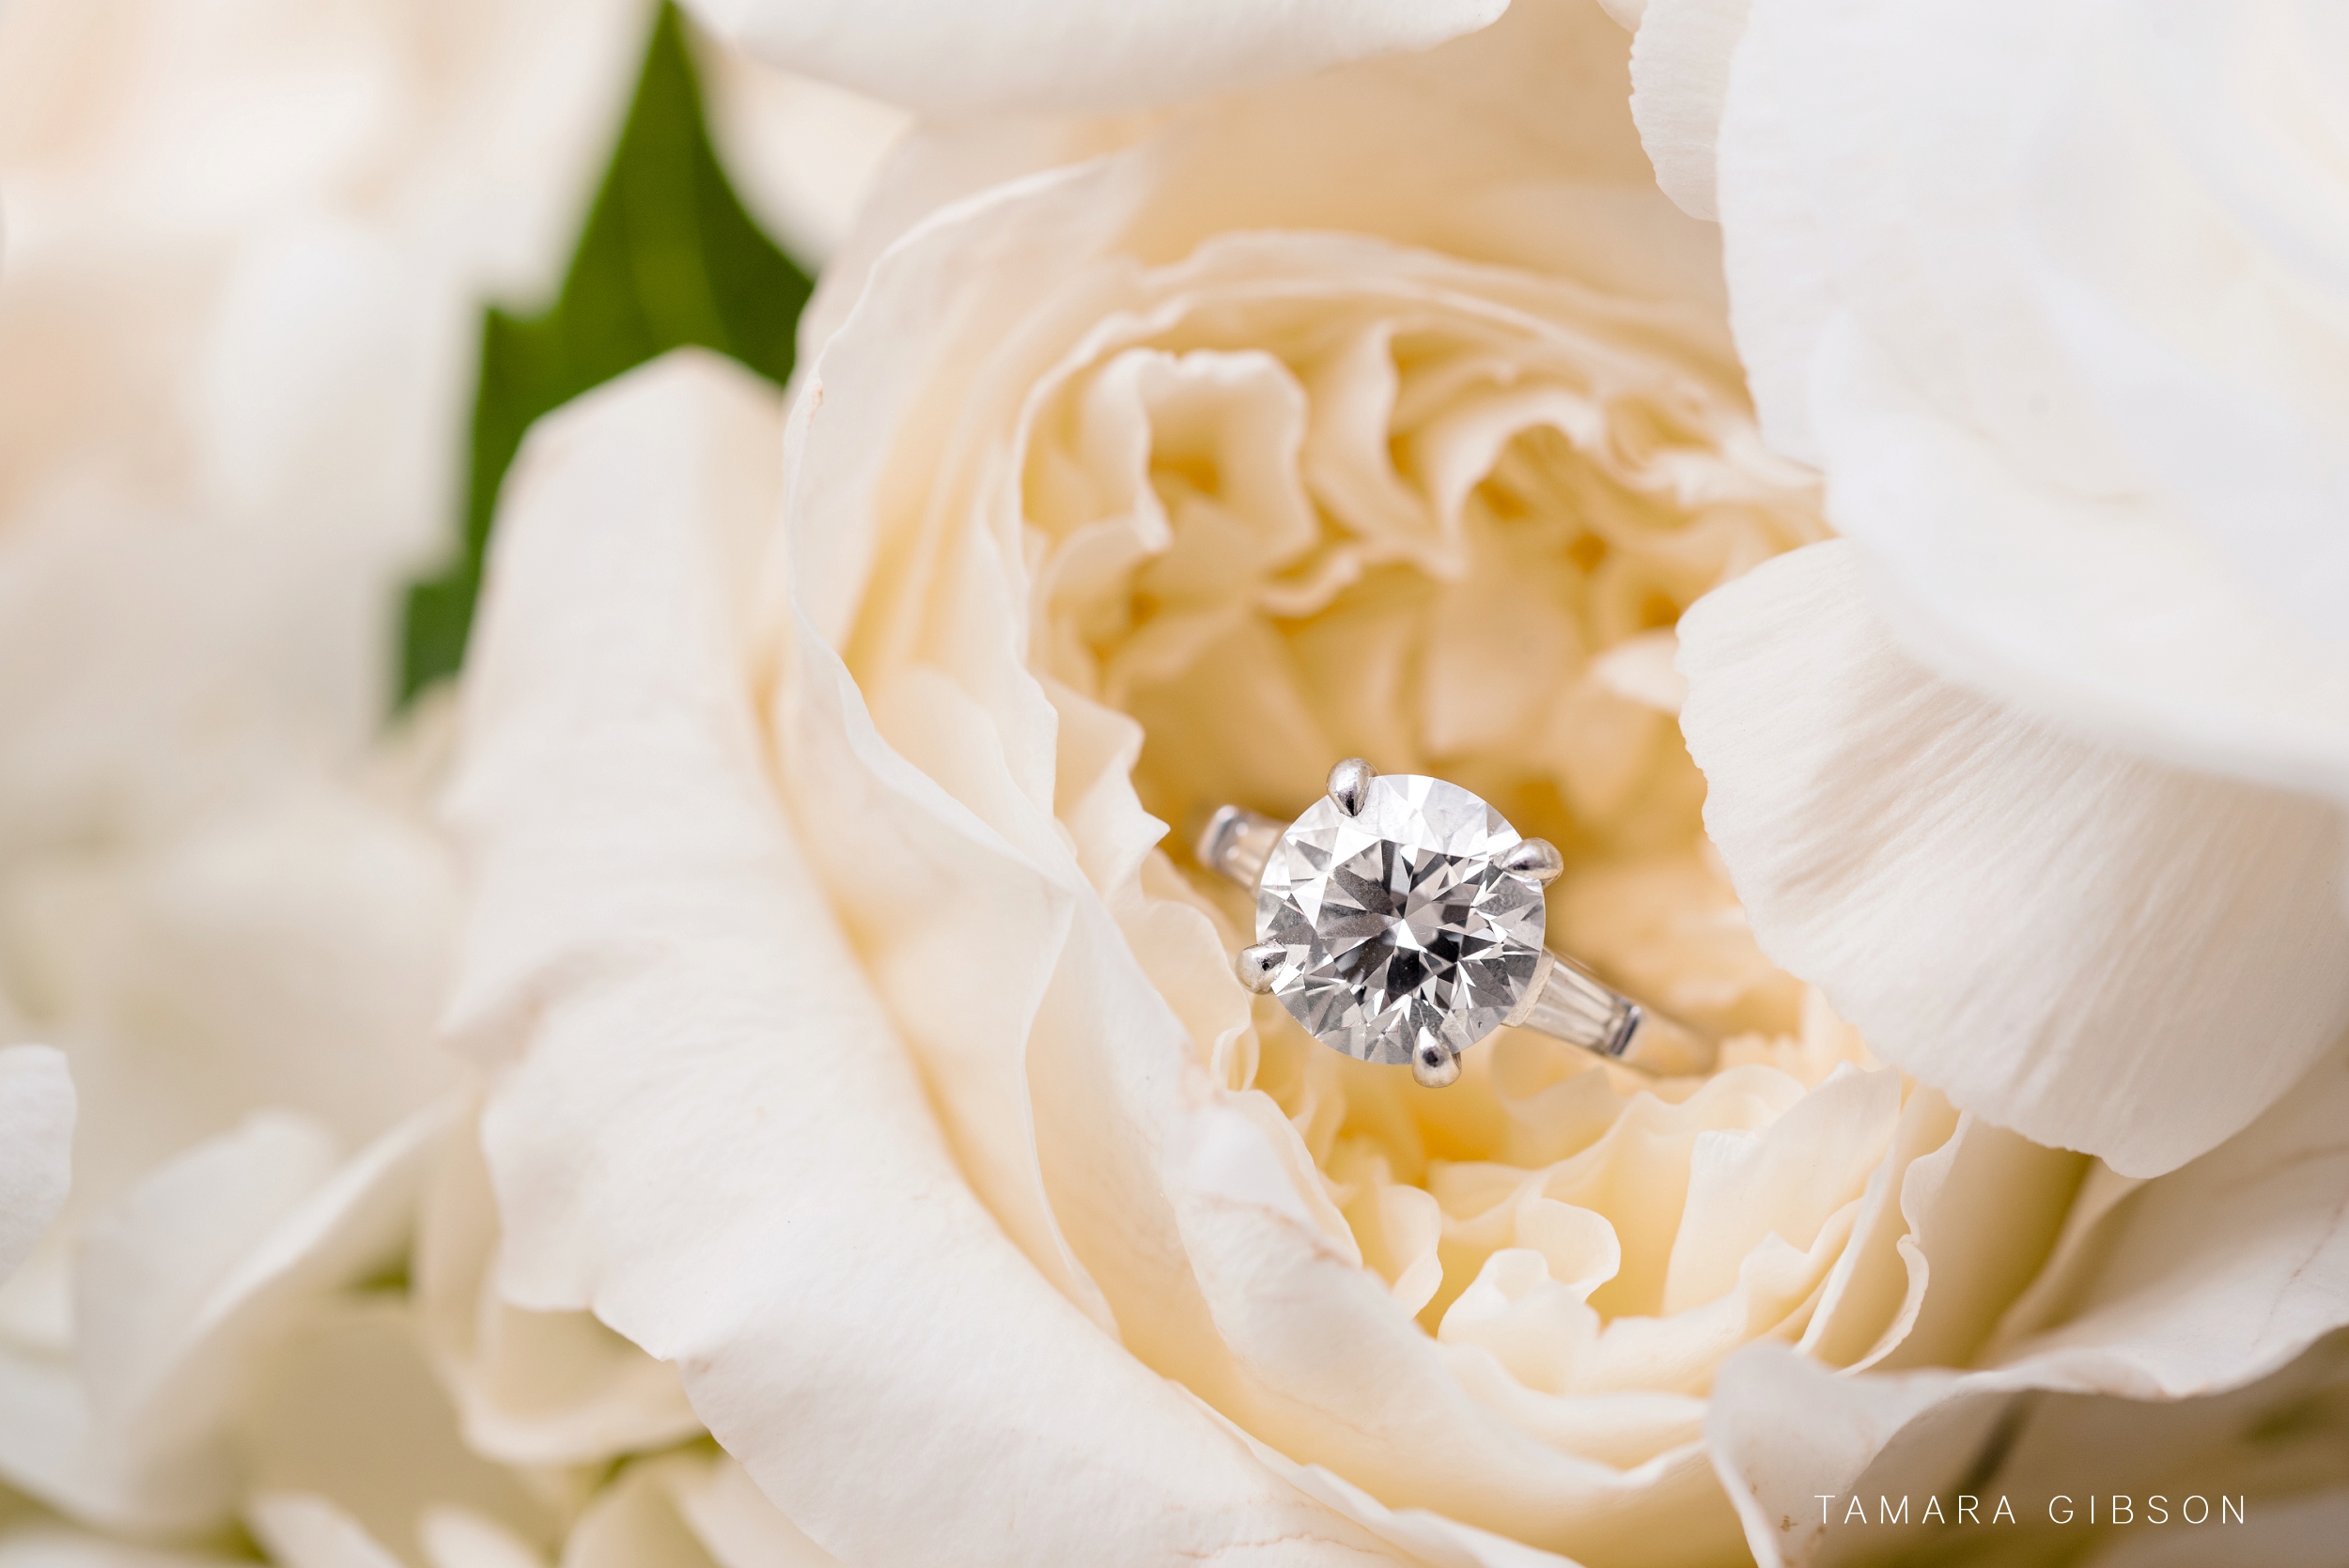 Detail shot of diamond ring in a flower